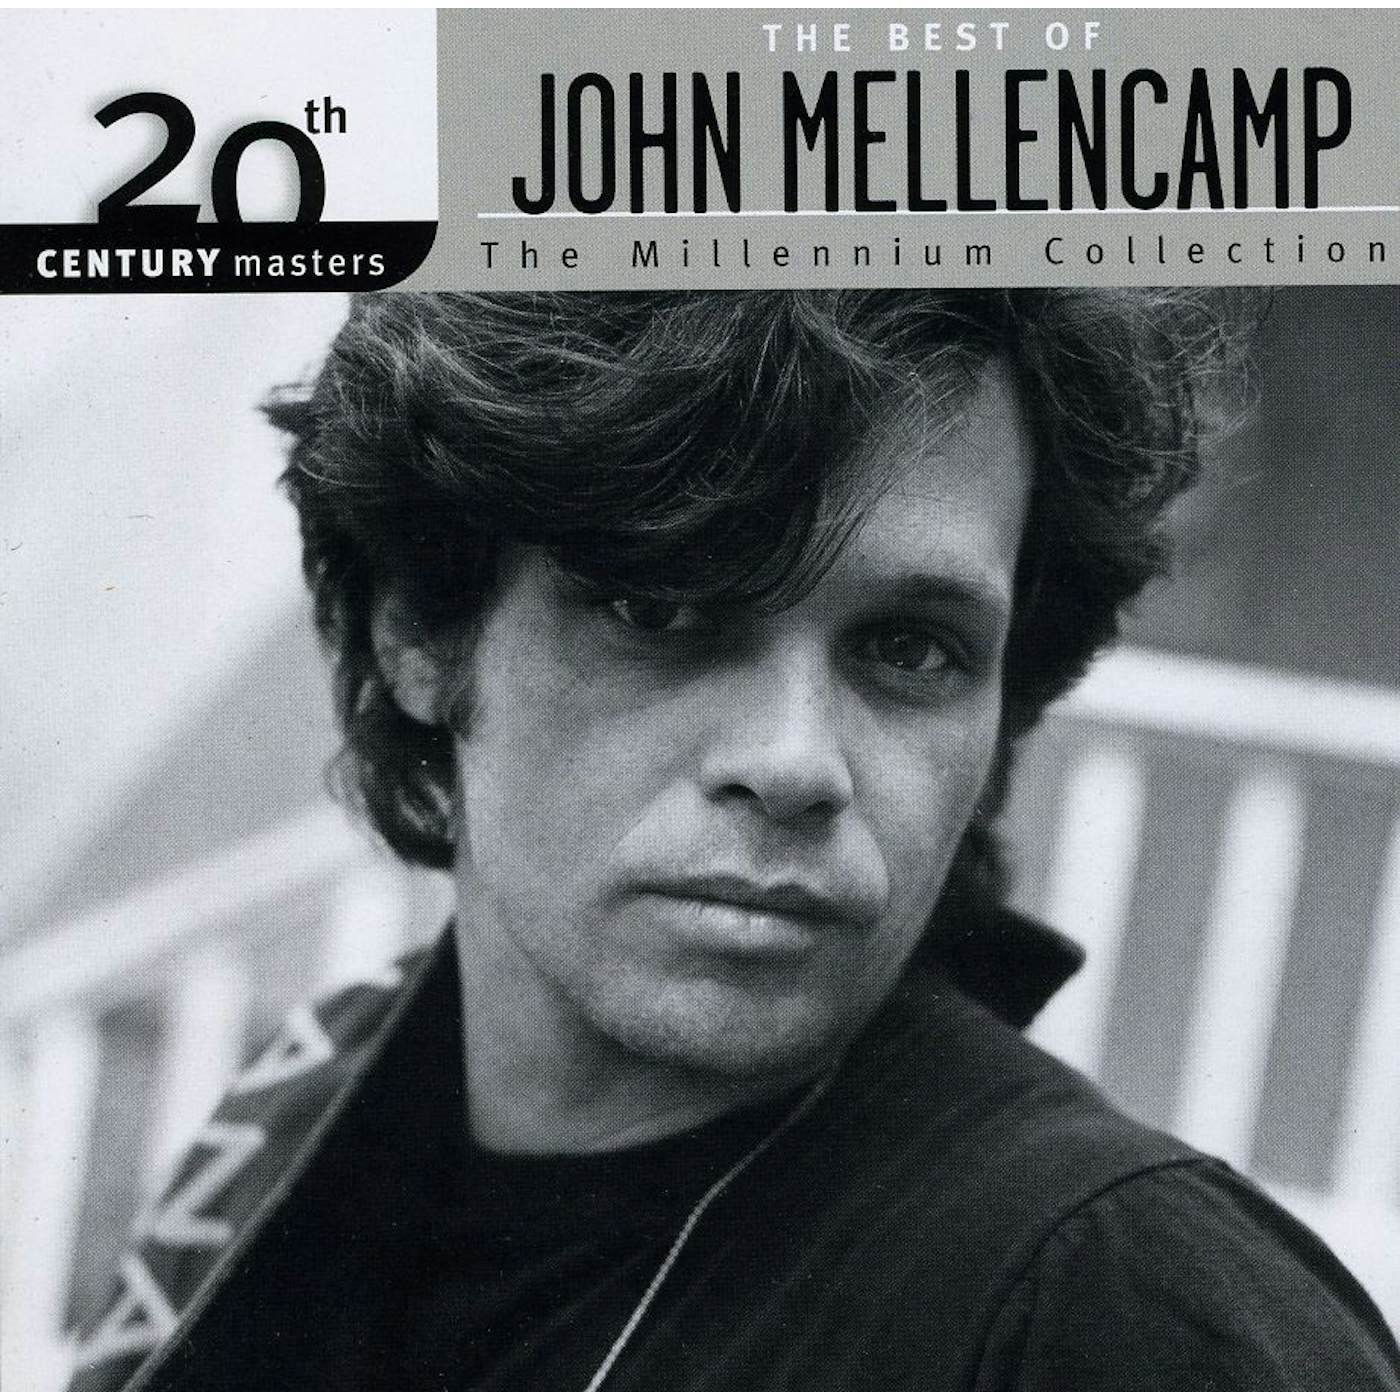 20TH CENTURY MASTERS: THE BEST OF JOHN MELLENCAMP CD